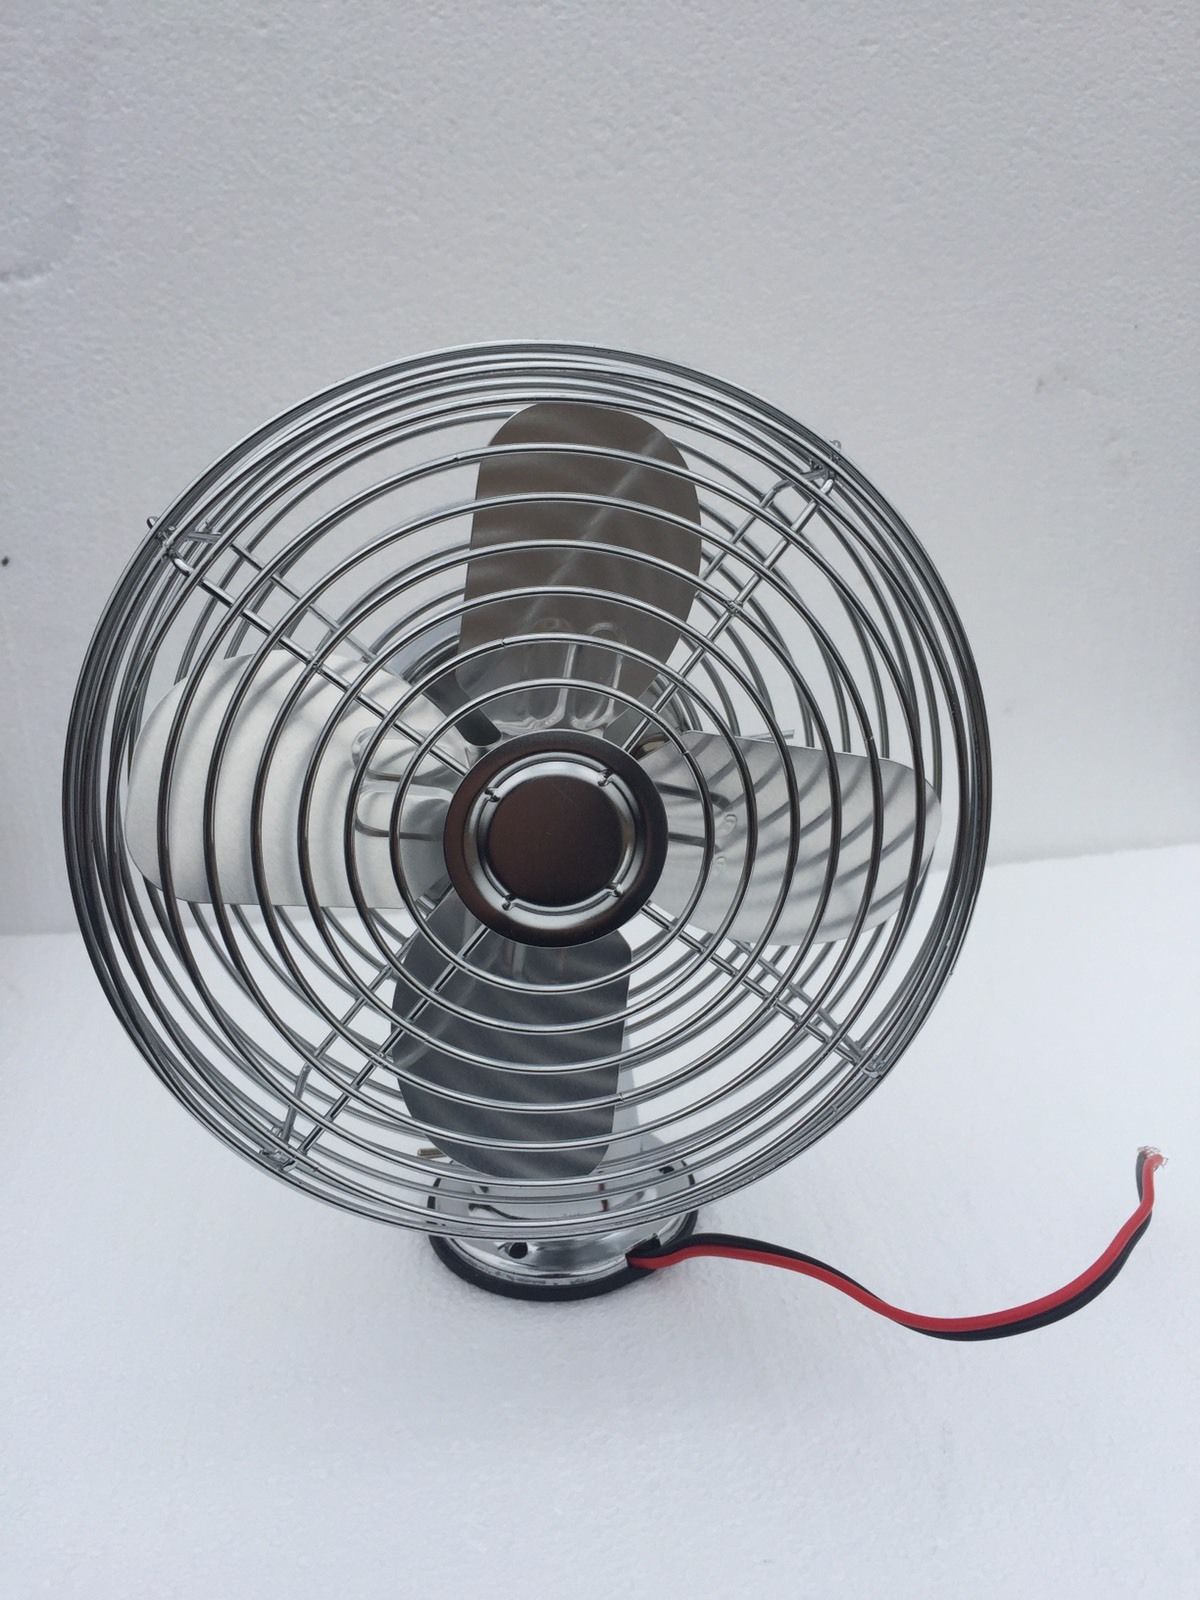 Atv Utv Cab Cooling Fan / Windshield Defrost Chrome 600 Cfm 12v - 24v